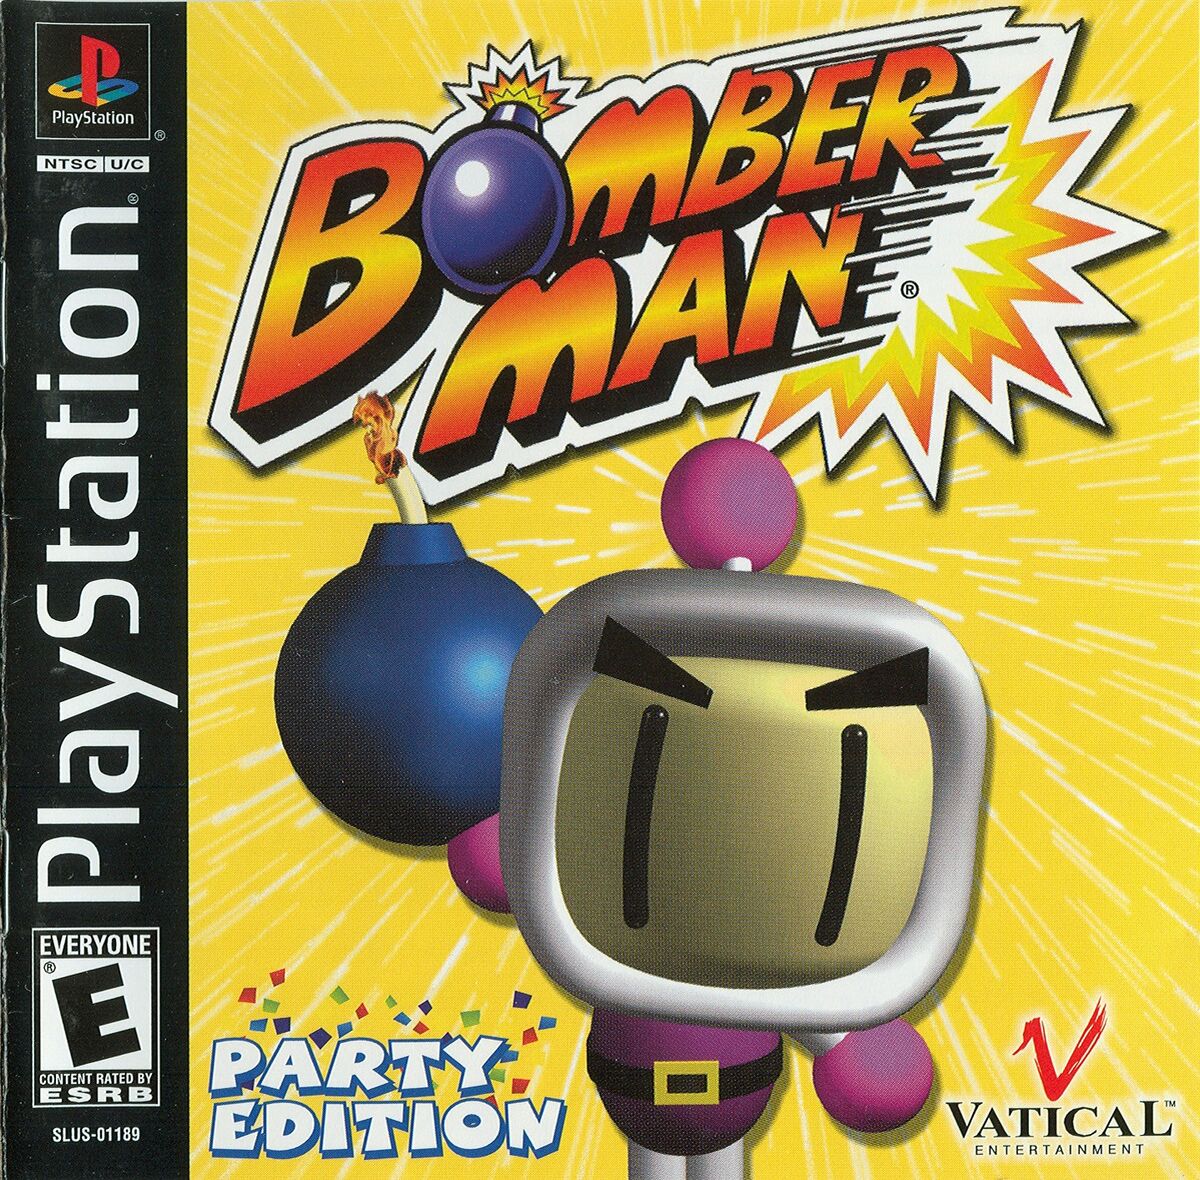 Online Bomberman - Wikipedia